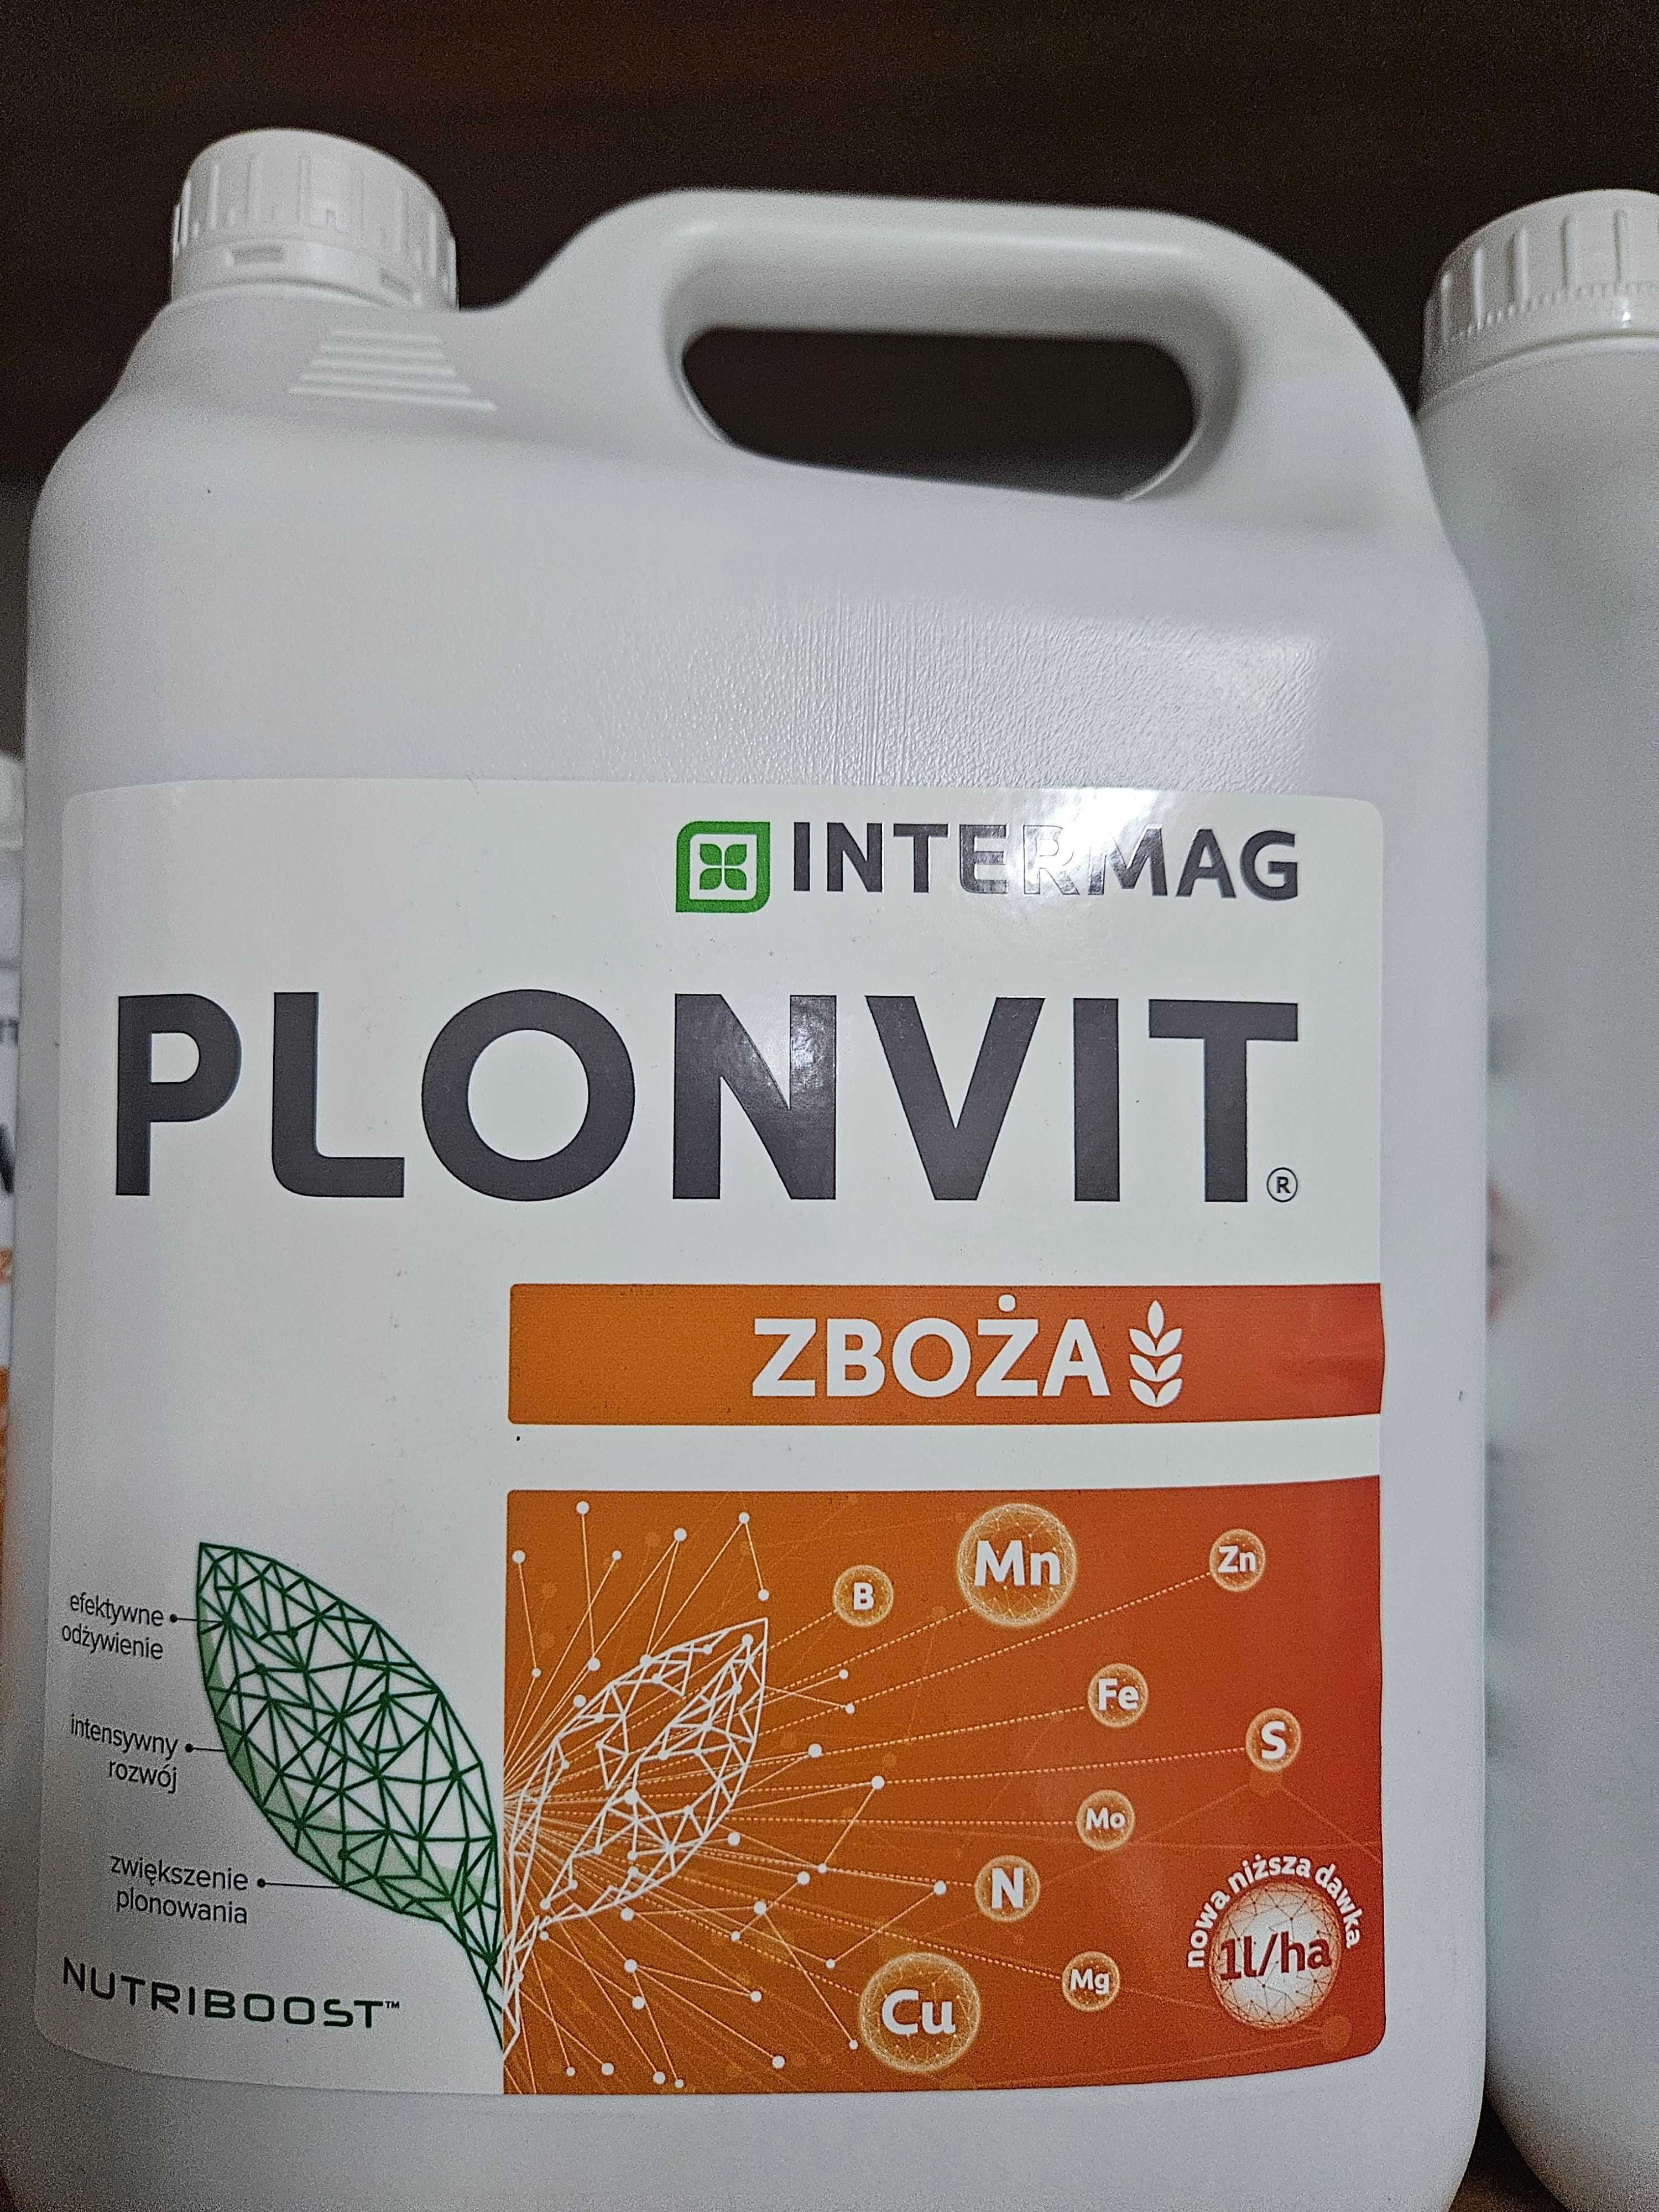 Florovit Agro Bionawóz 20L cena brutto